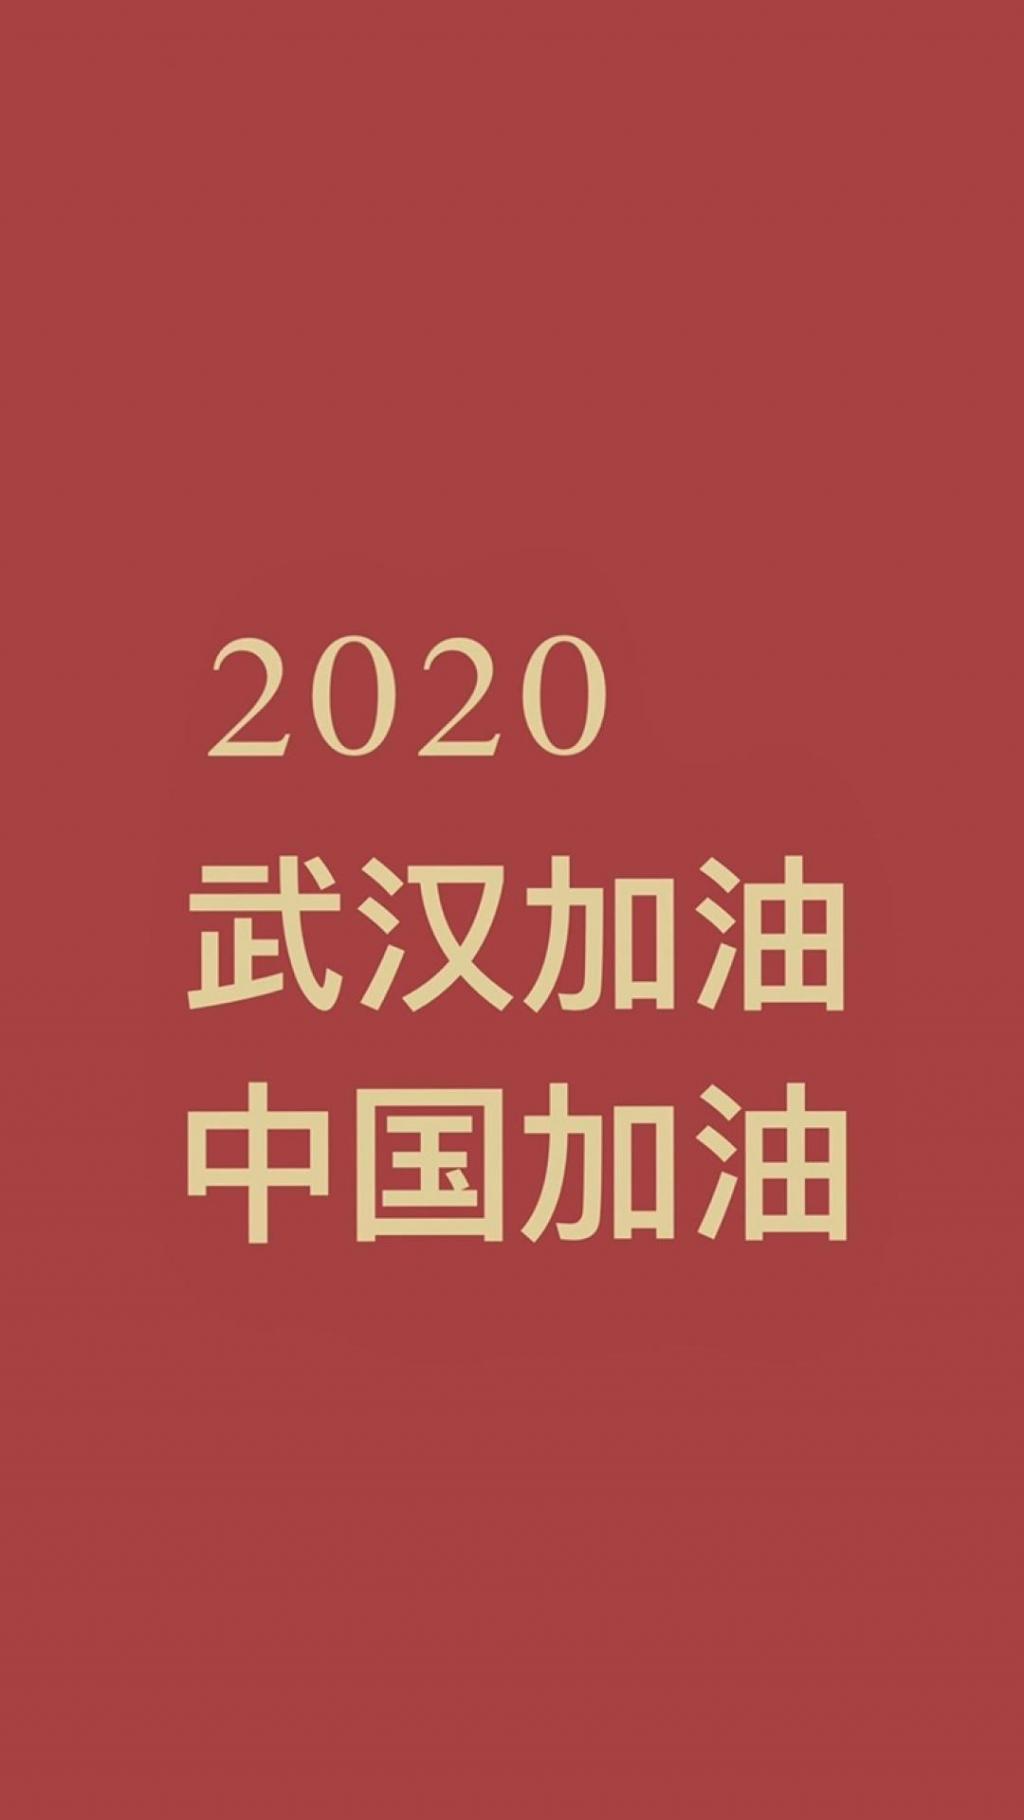 2020年武汉加油手机壁纸